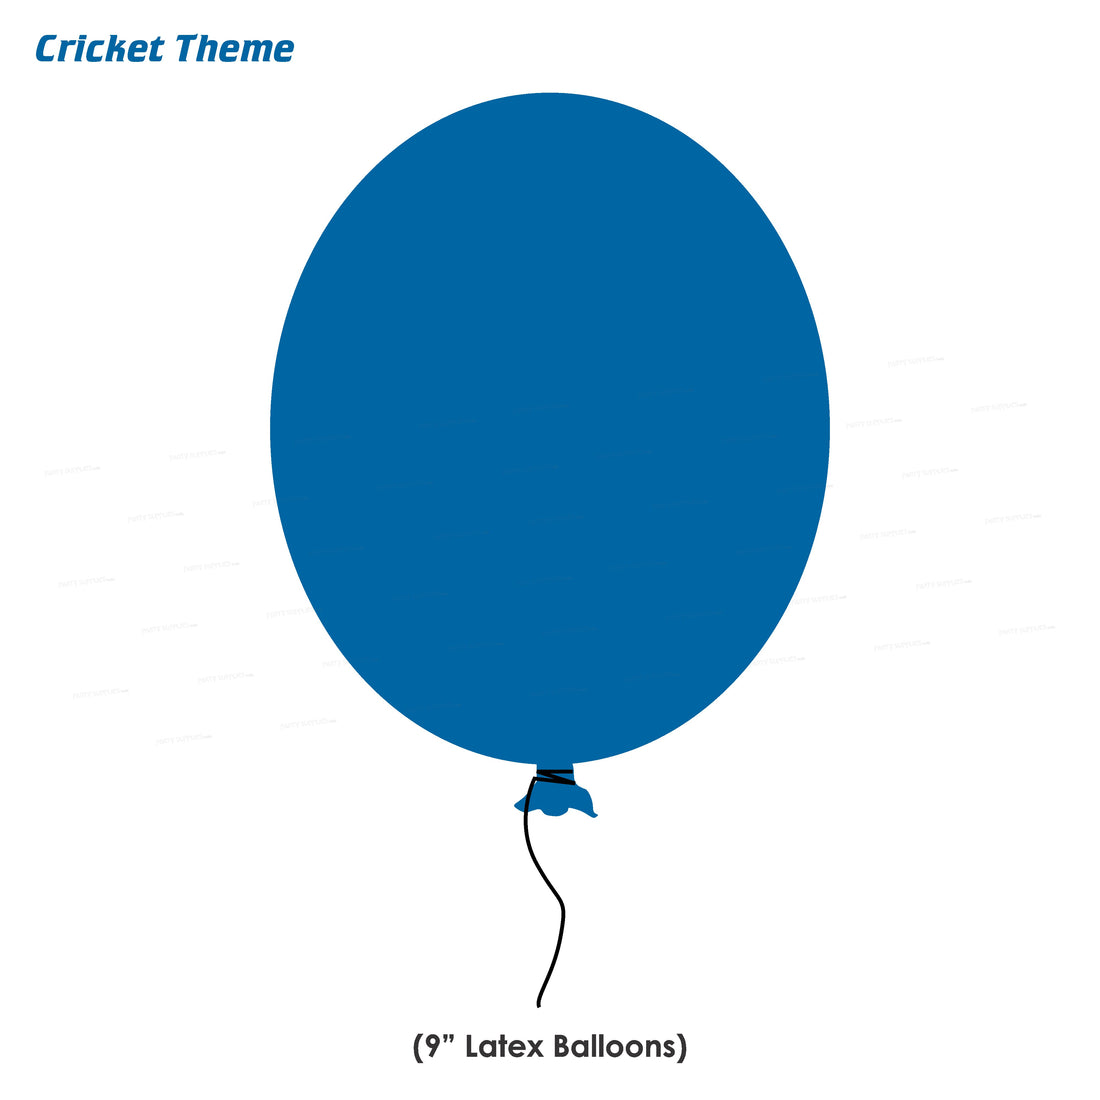 PSI Cricket Theme Colour 30 Pcs Balloons